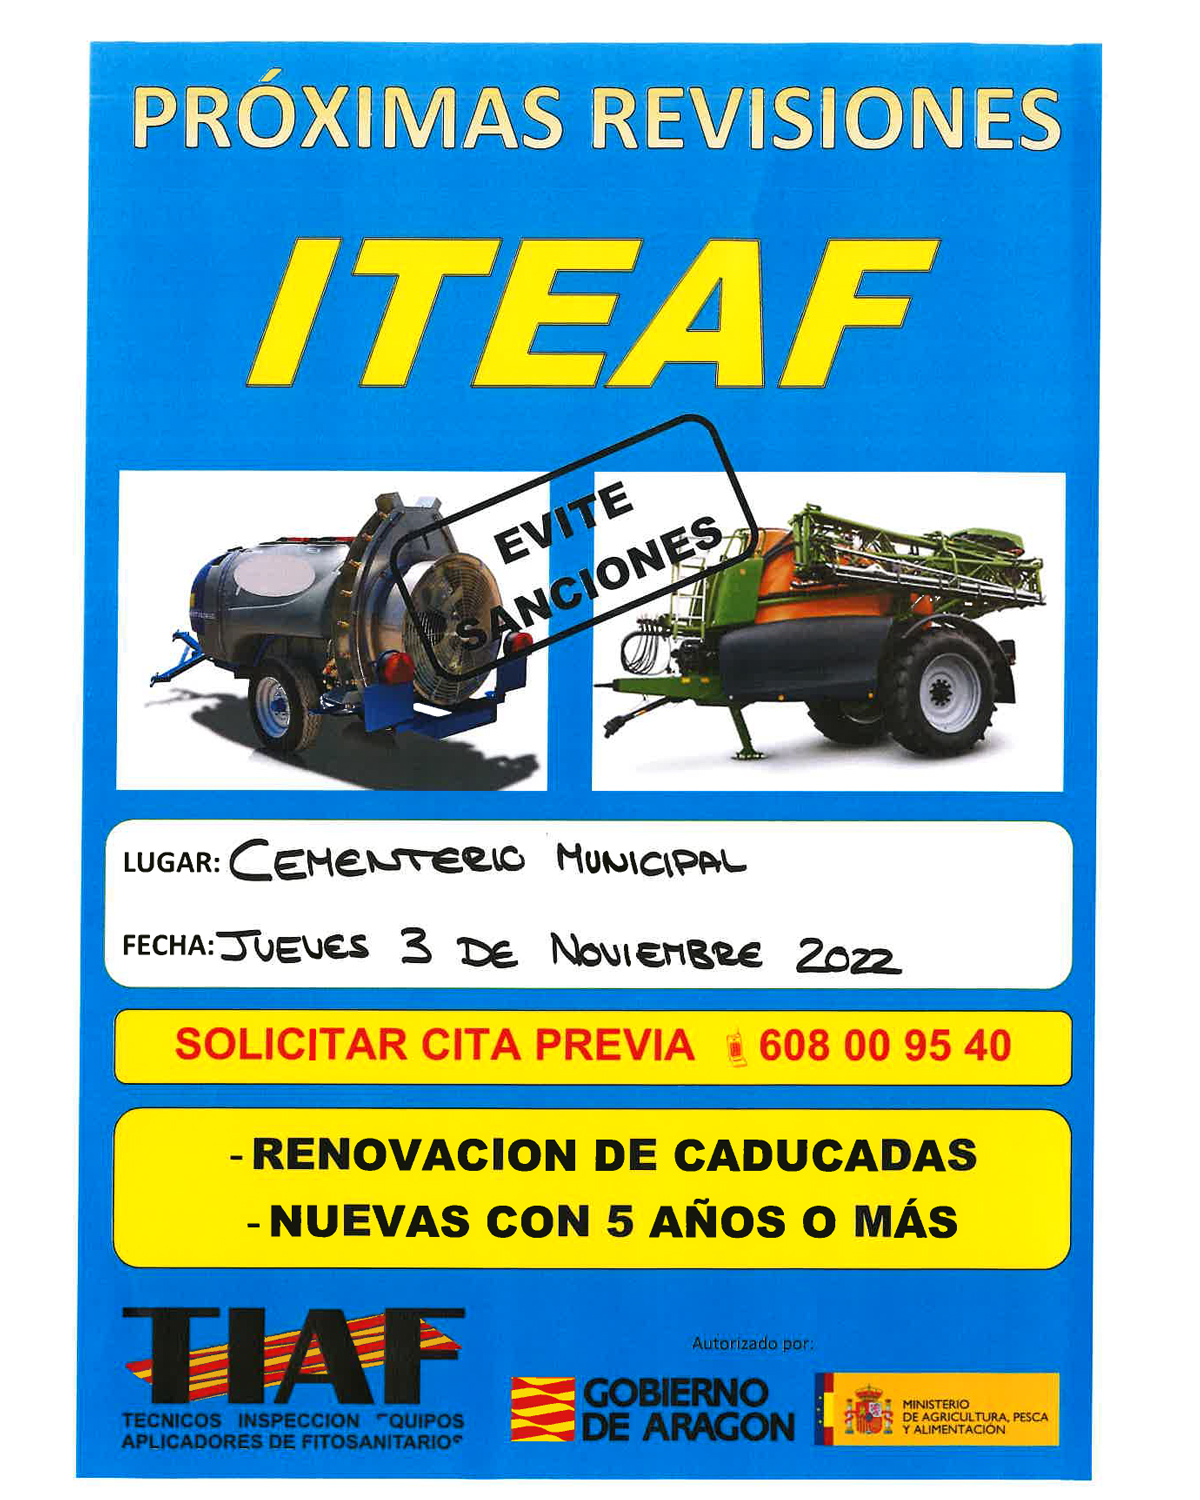 Próximas revisiones ITEAF